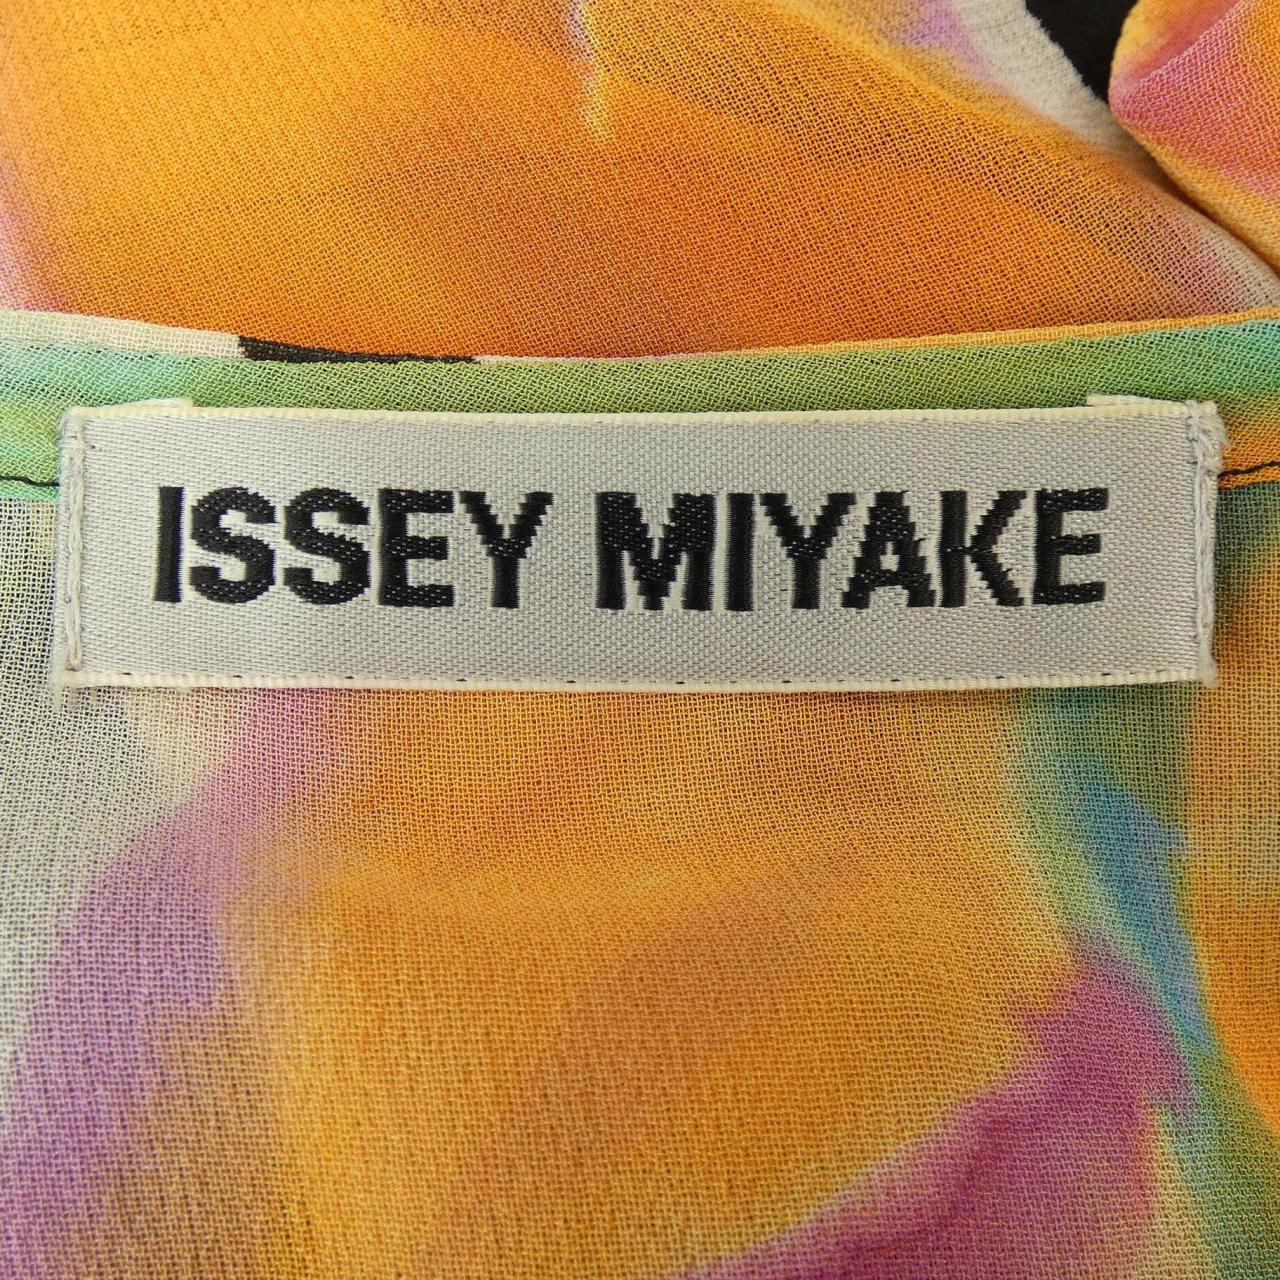 ISSEY MIYAKE Tops